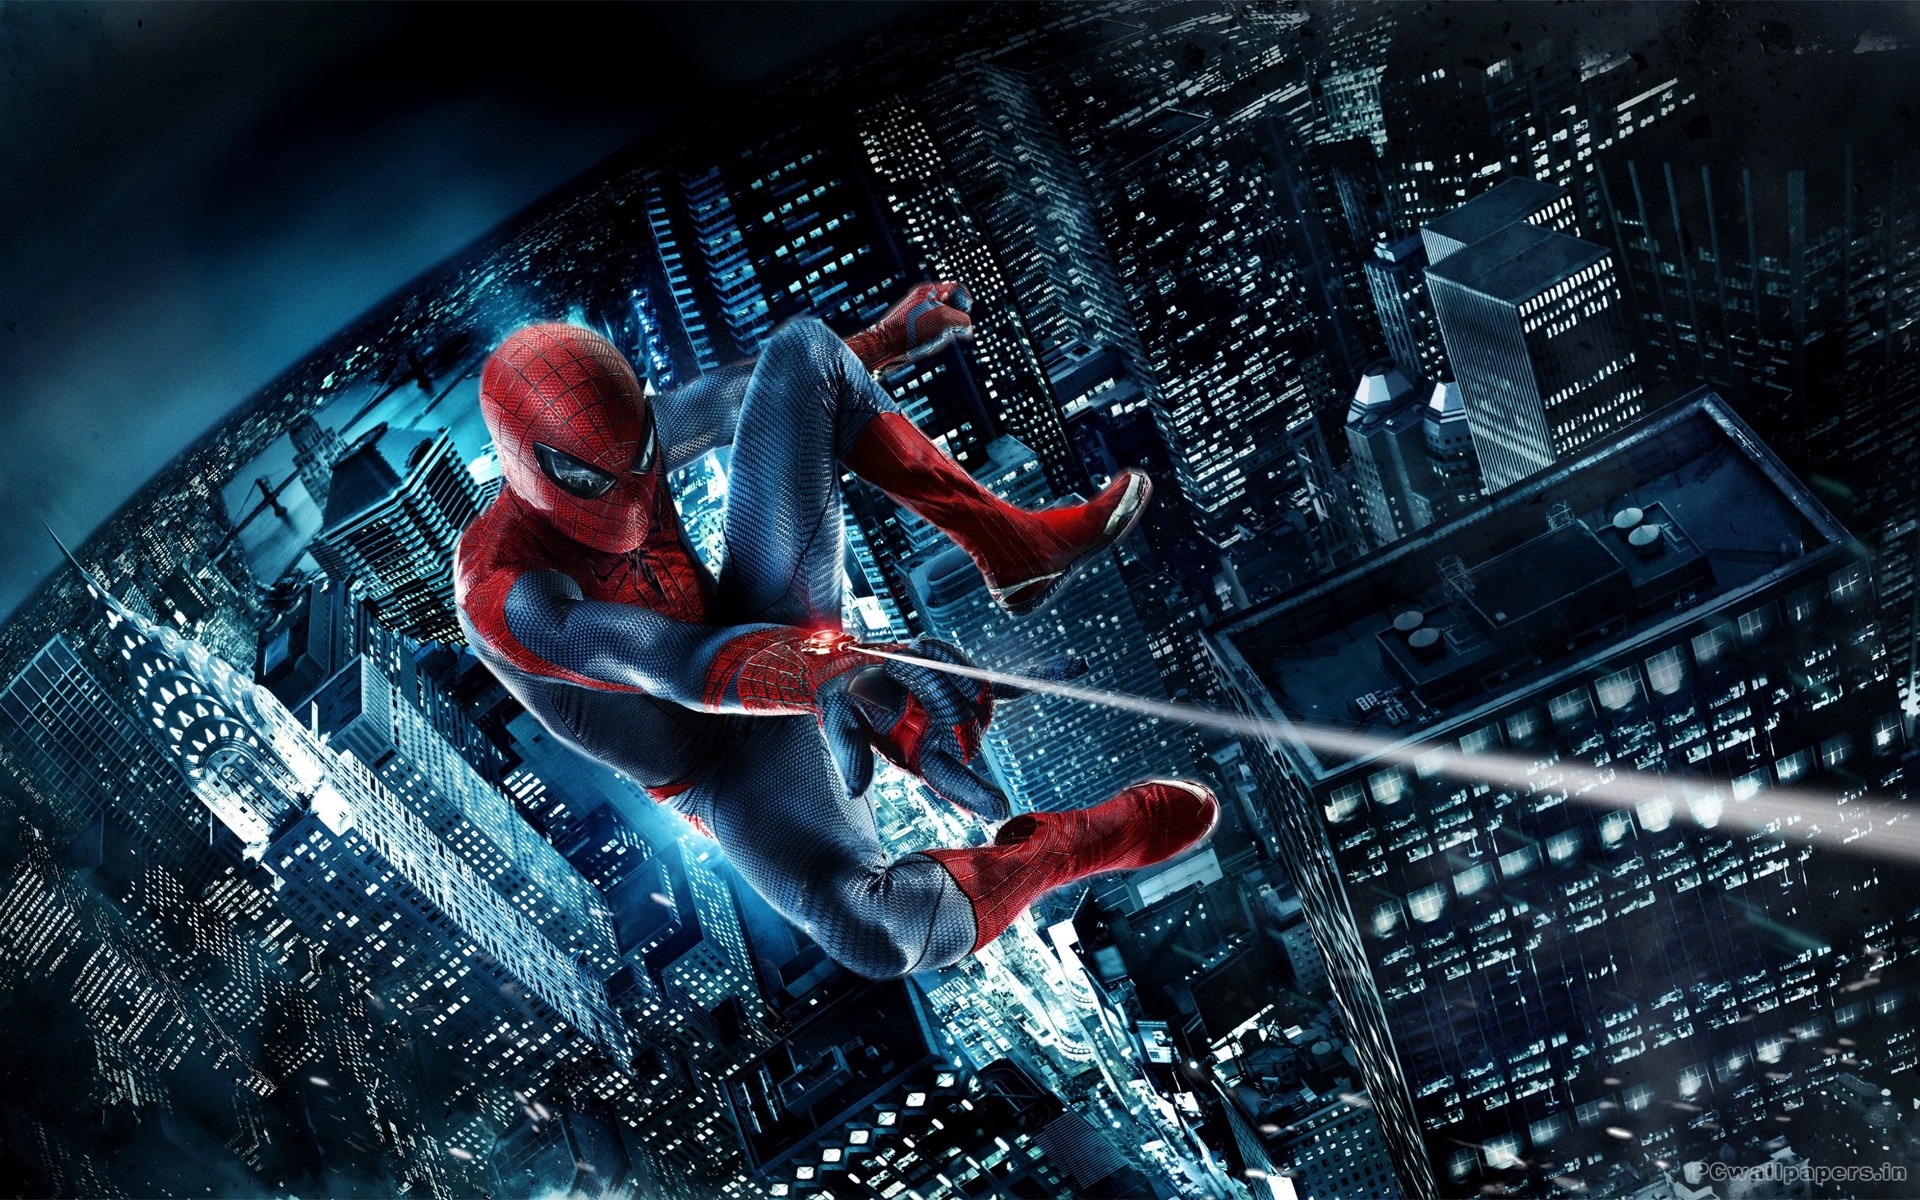 Spider-Man HD Wallpapers for desktop download